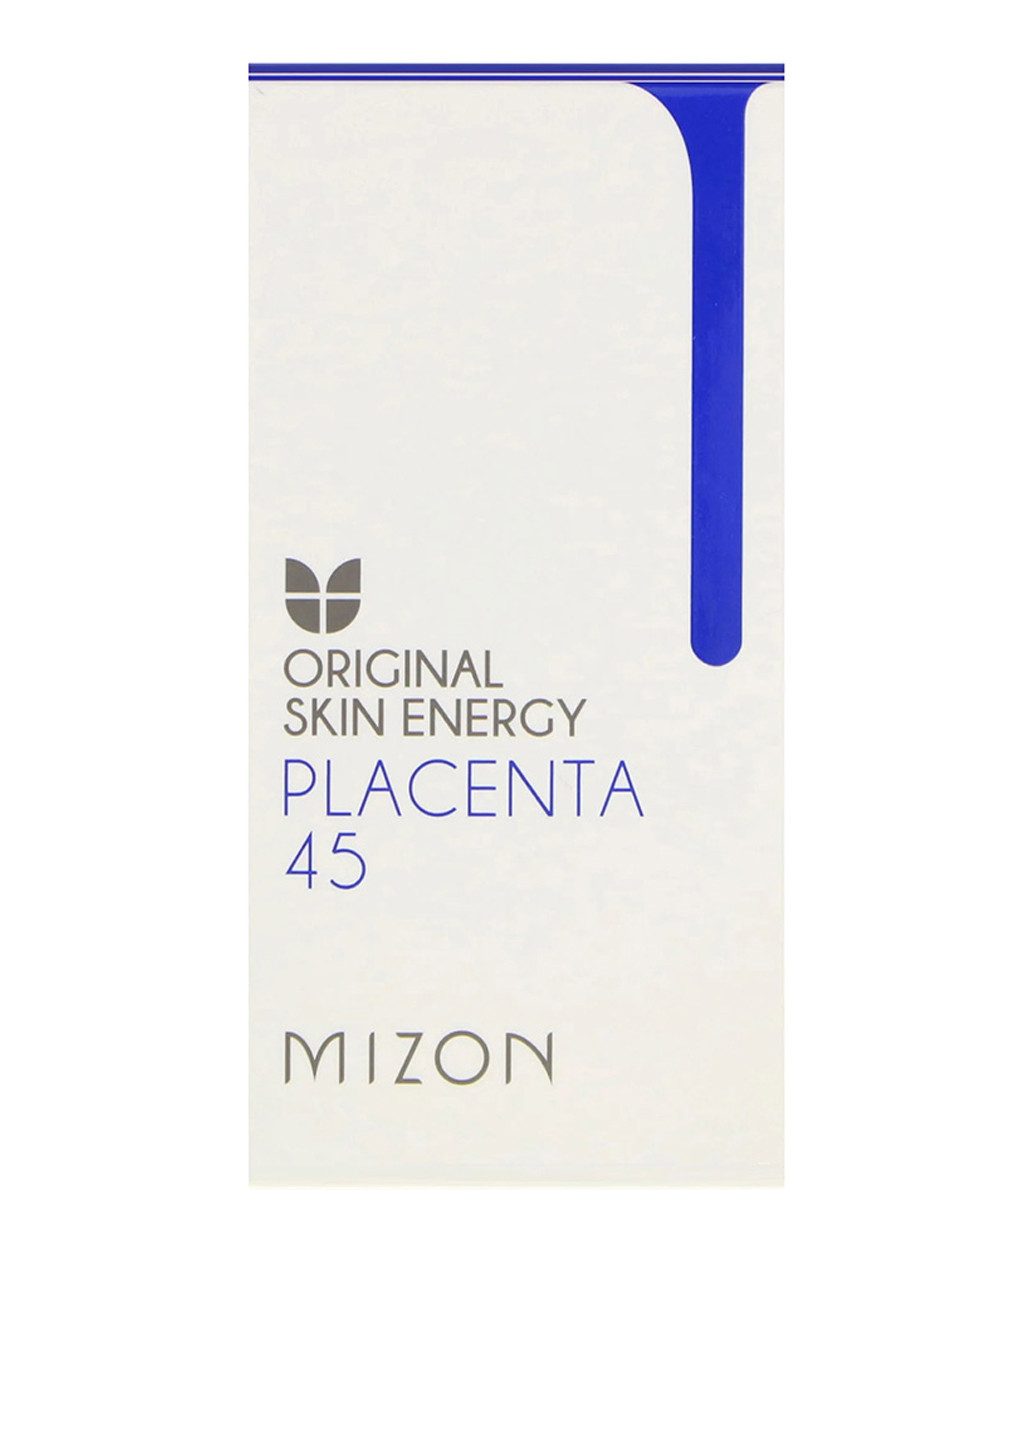 Сироватка плацентарна Original Skin Energy Placenta 45, 30 мл Mizon безбарвна